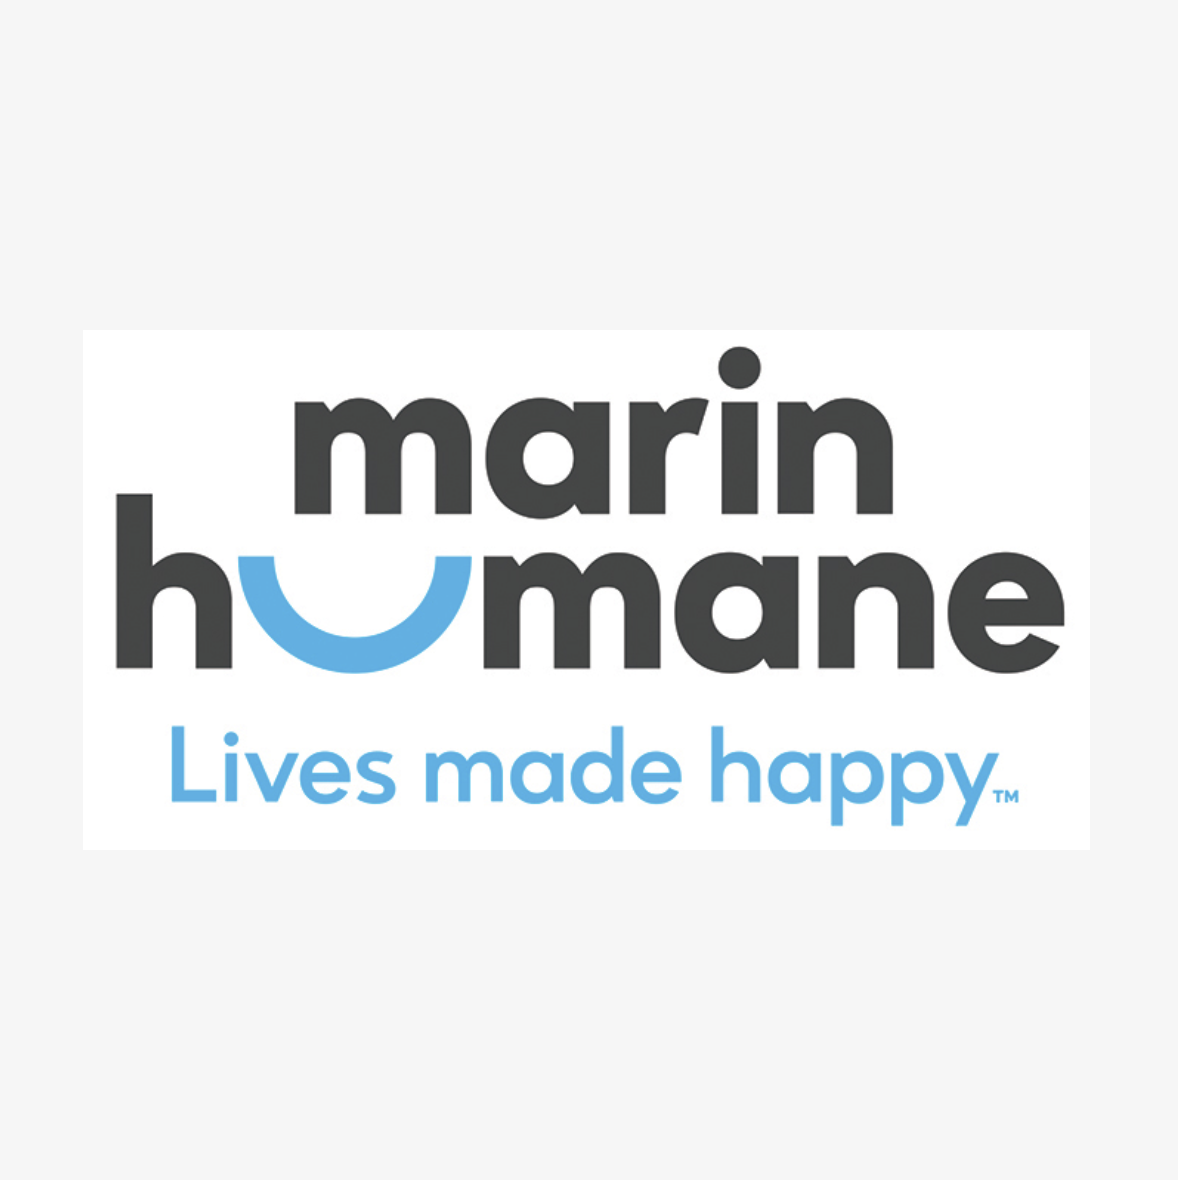 Marin Human_siteborder.png